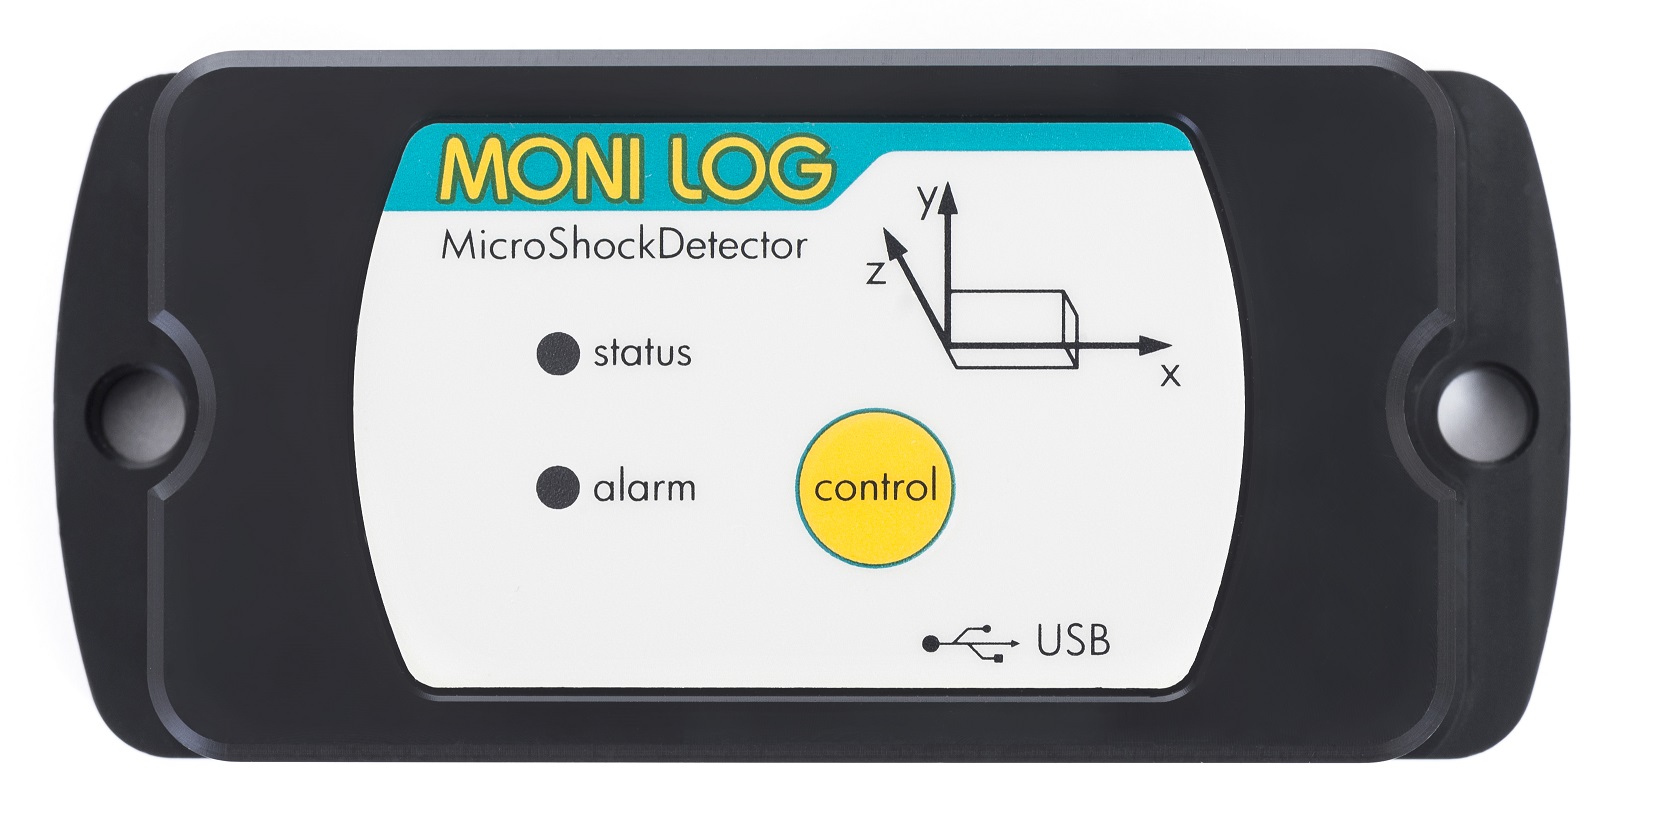 MONI LOG® MicroShockDetector